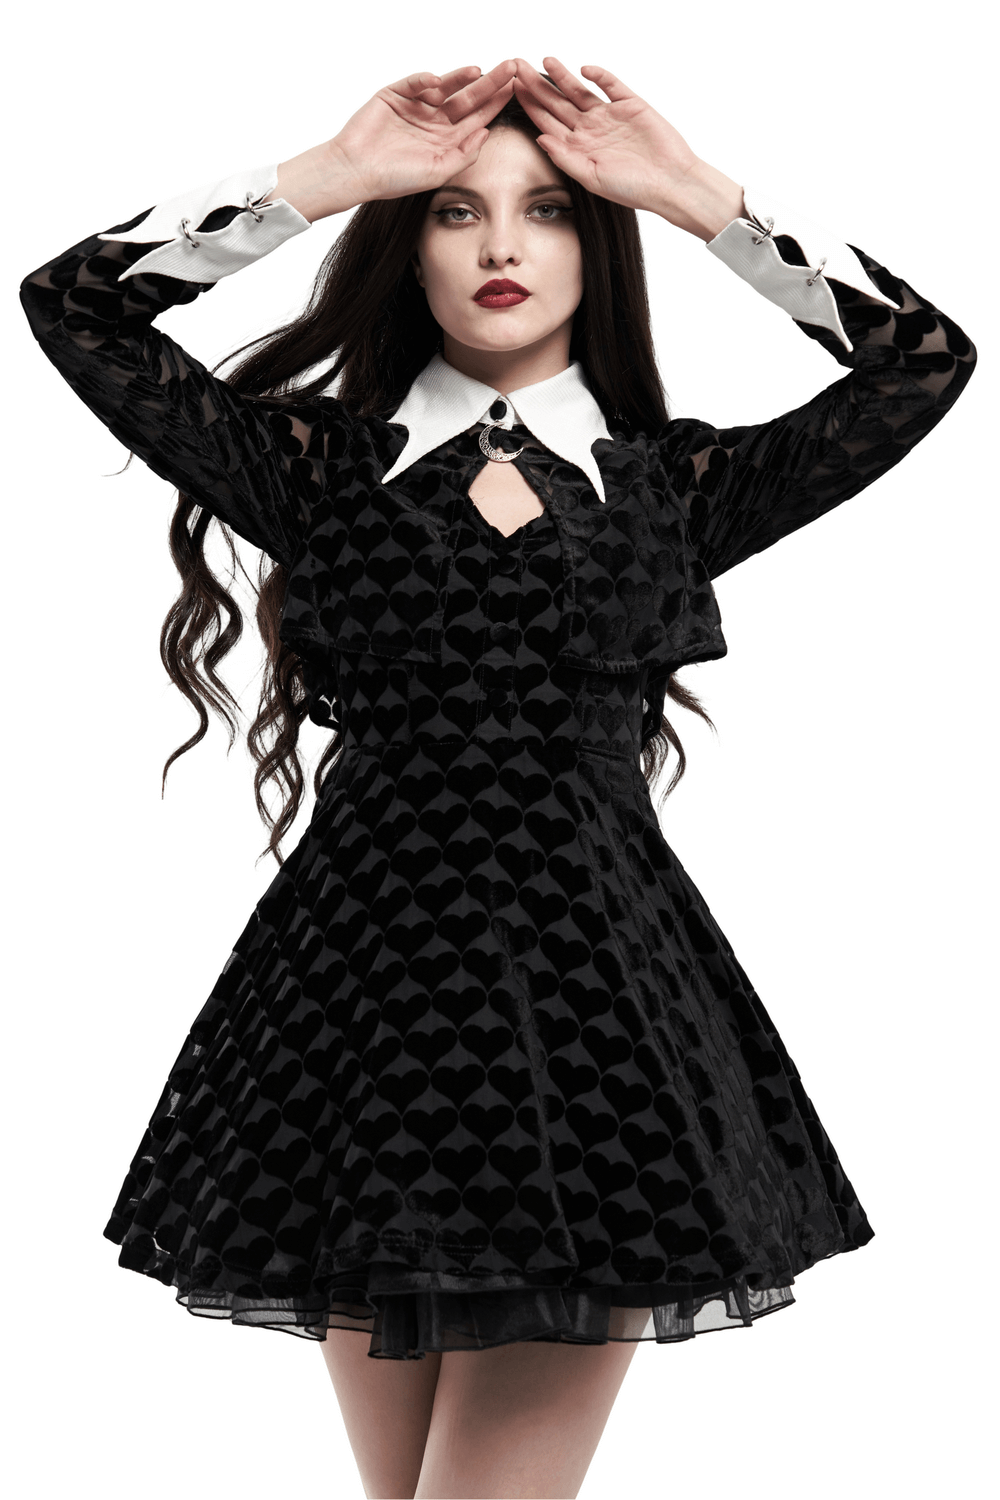 Gothic Velvet Short Dress with White Cuffs and Bat Collar